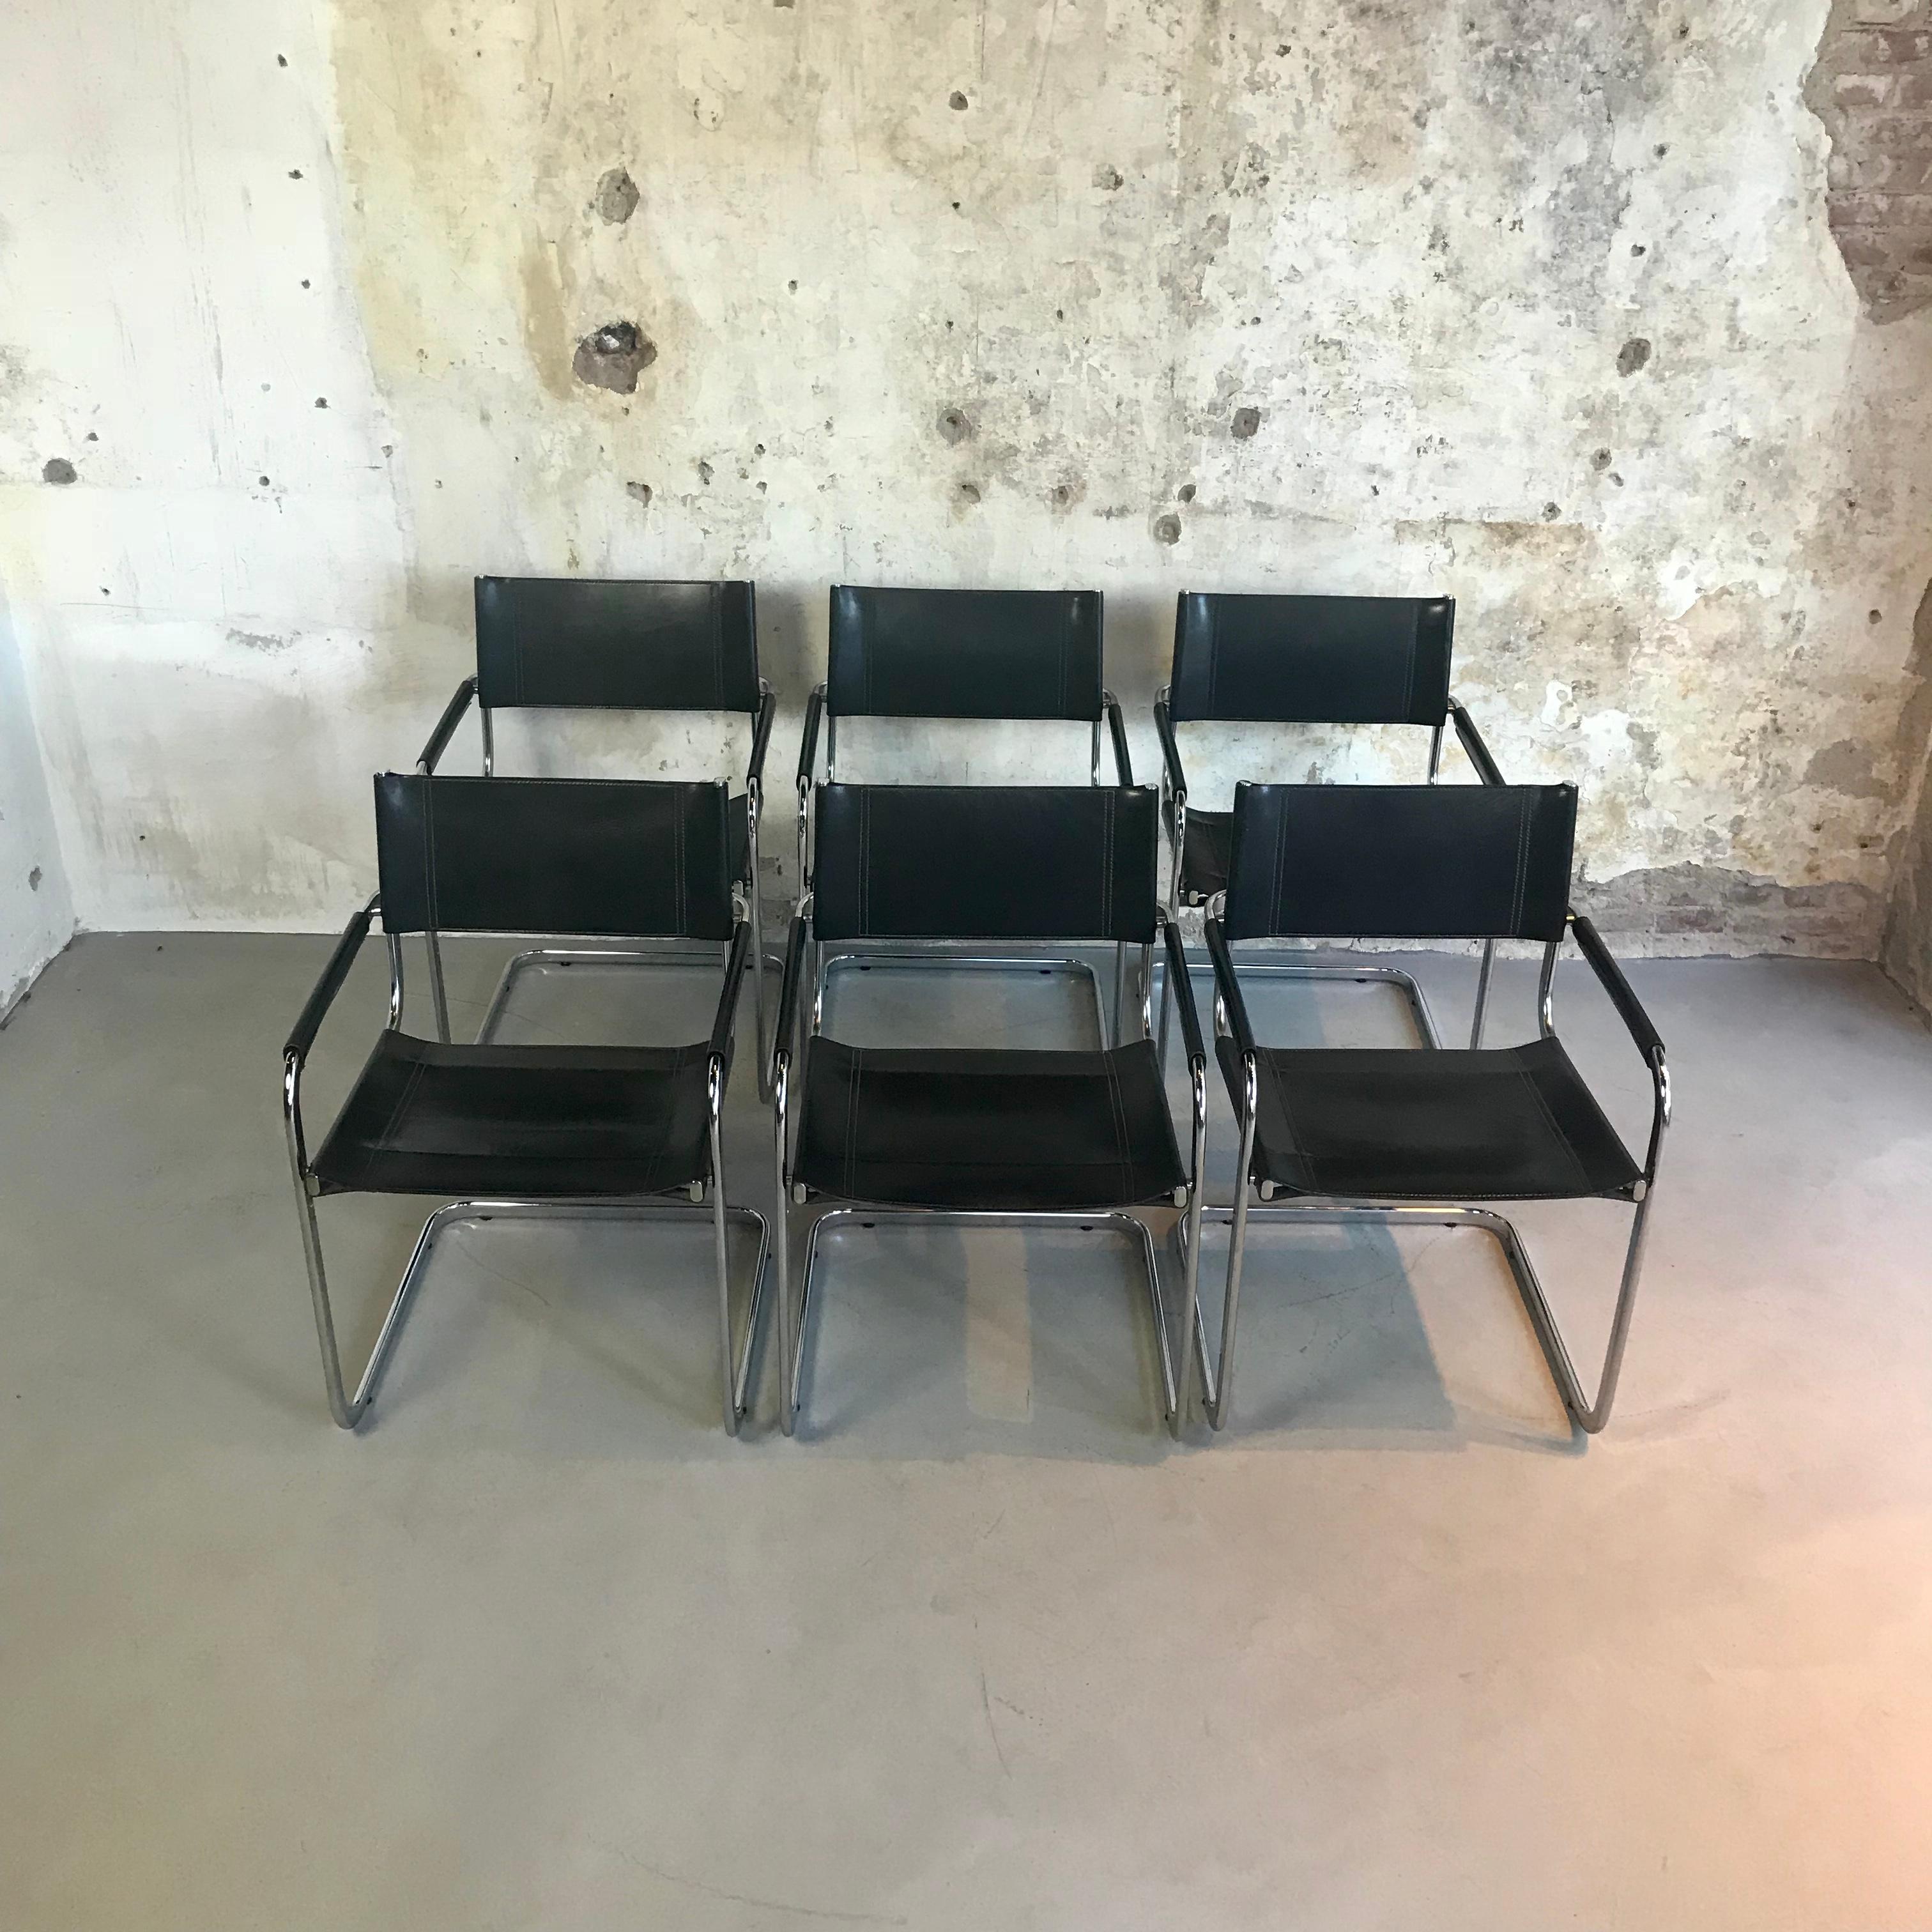 Italian Mid-Century Modern Cantilever Chairs by Eero Aarnio for Mobel Italia, 1970s